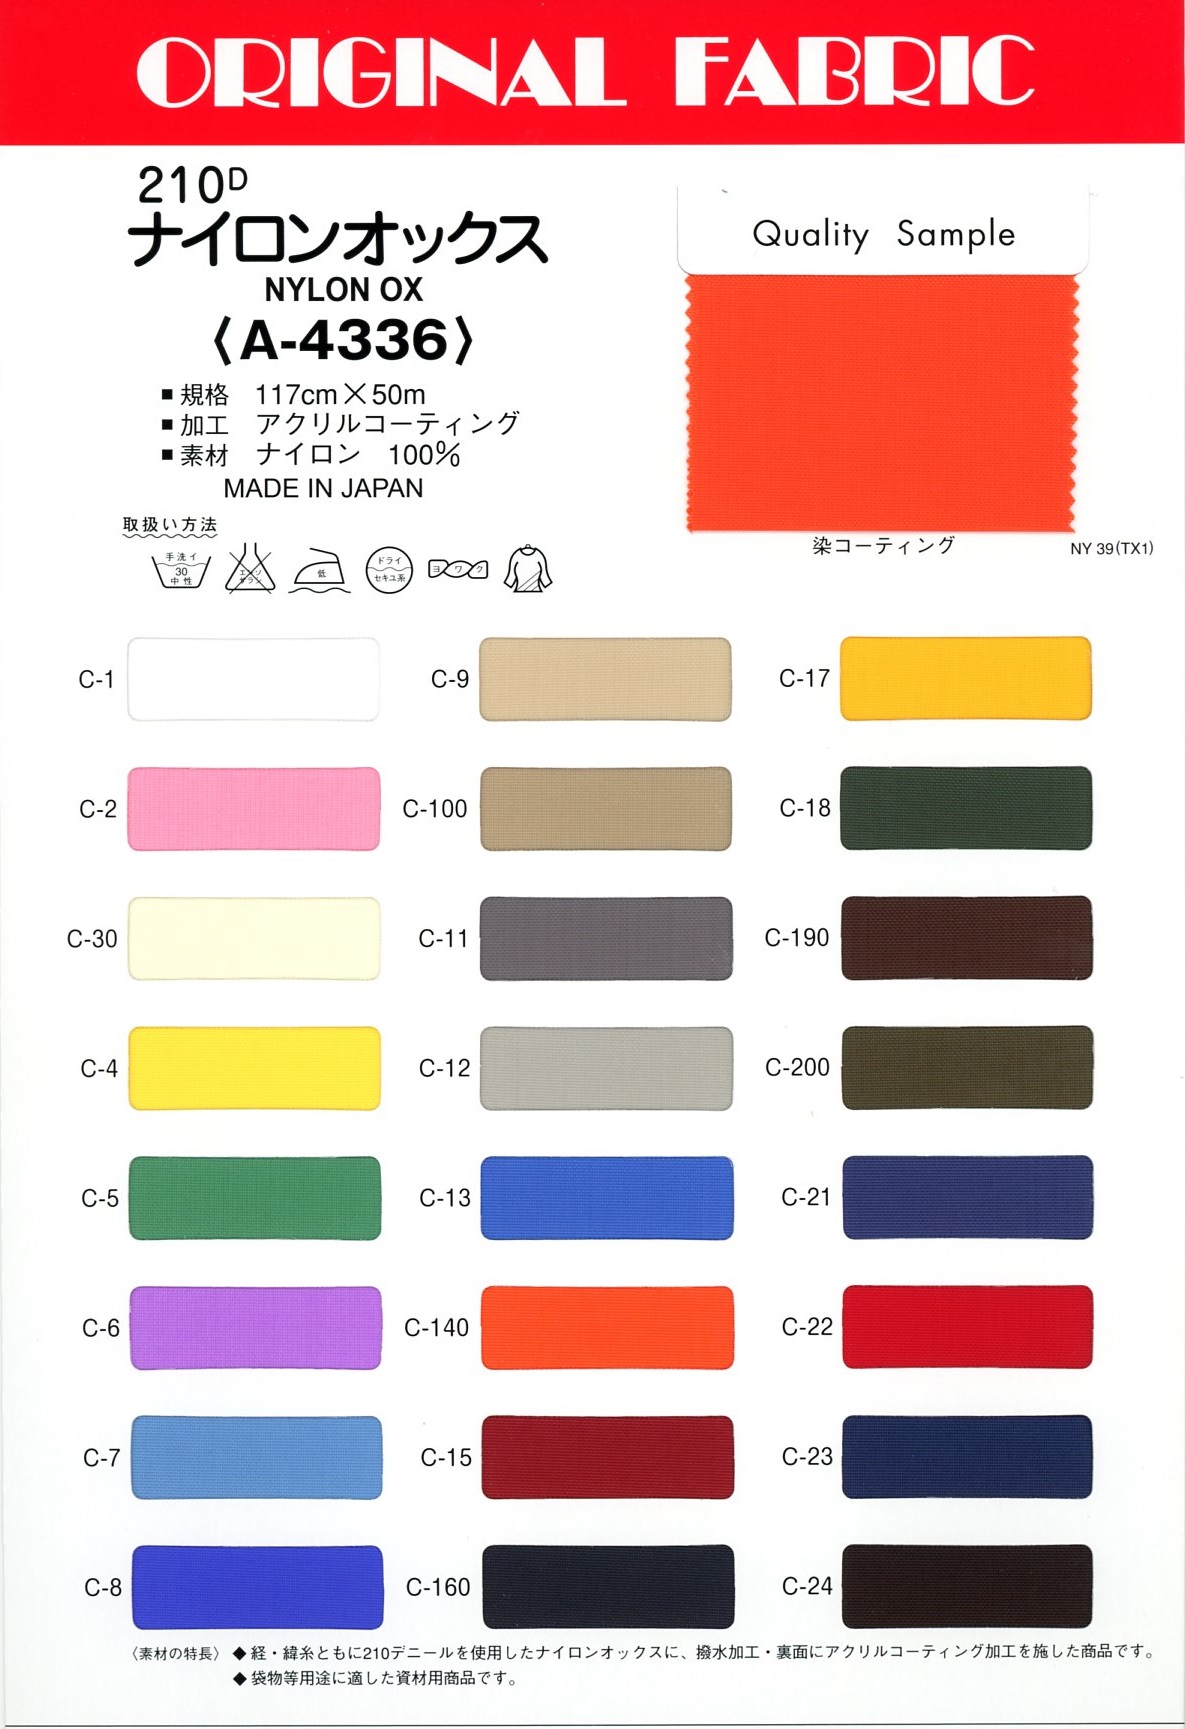 A4336 210D Nylon Oxford[Textile / Fabric] Masuda